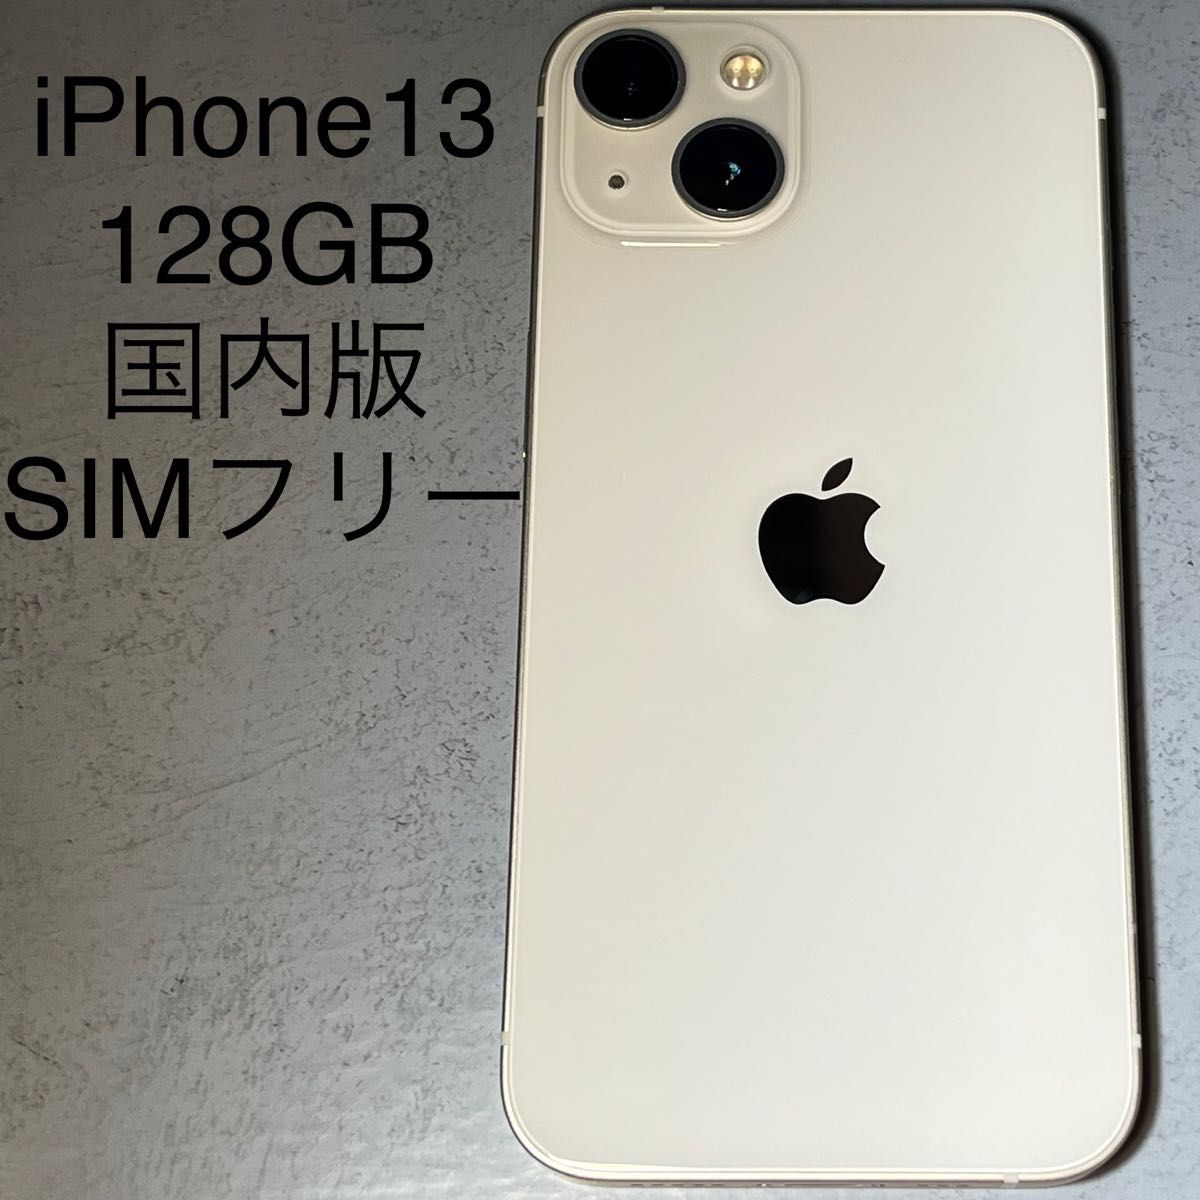 Apple iPhone 13 128GB 国内版 SIMフリー 画面新品交換済み 本体